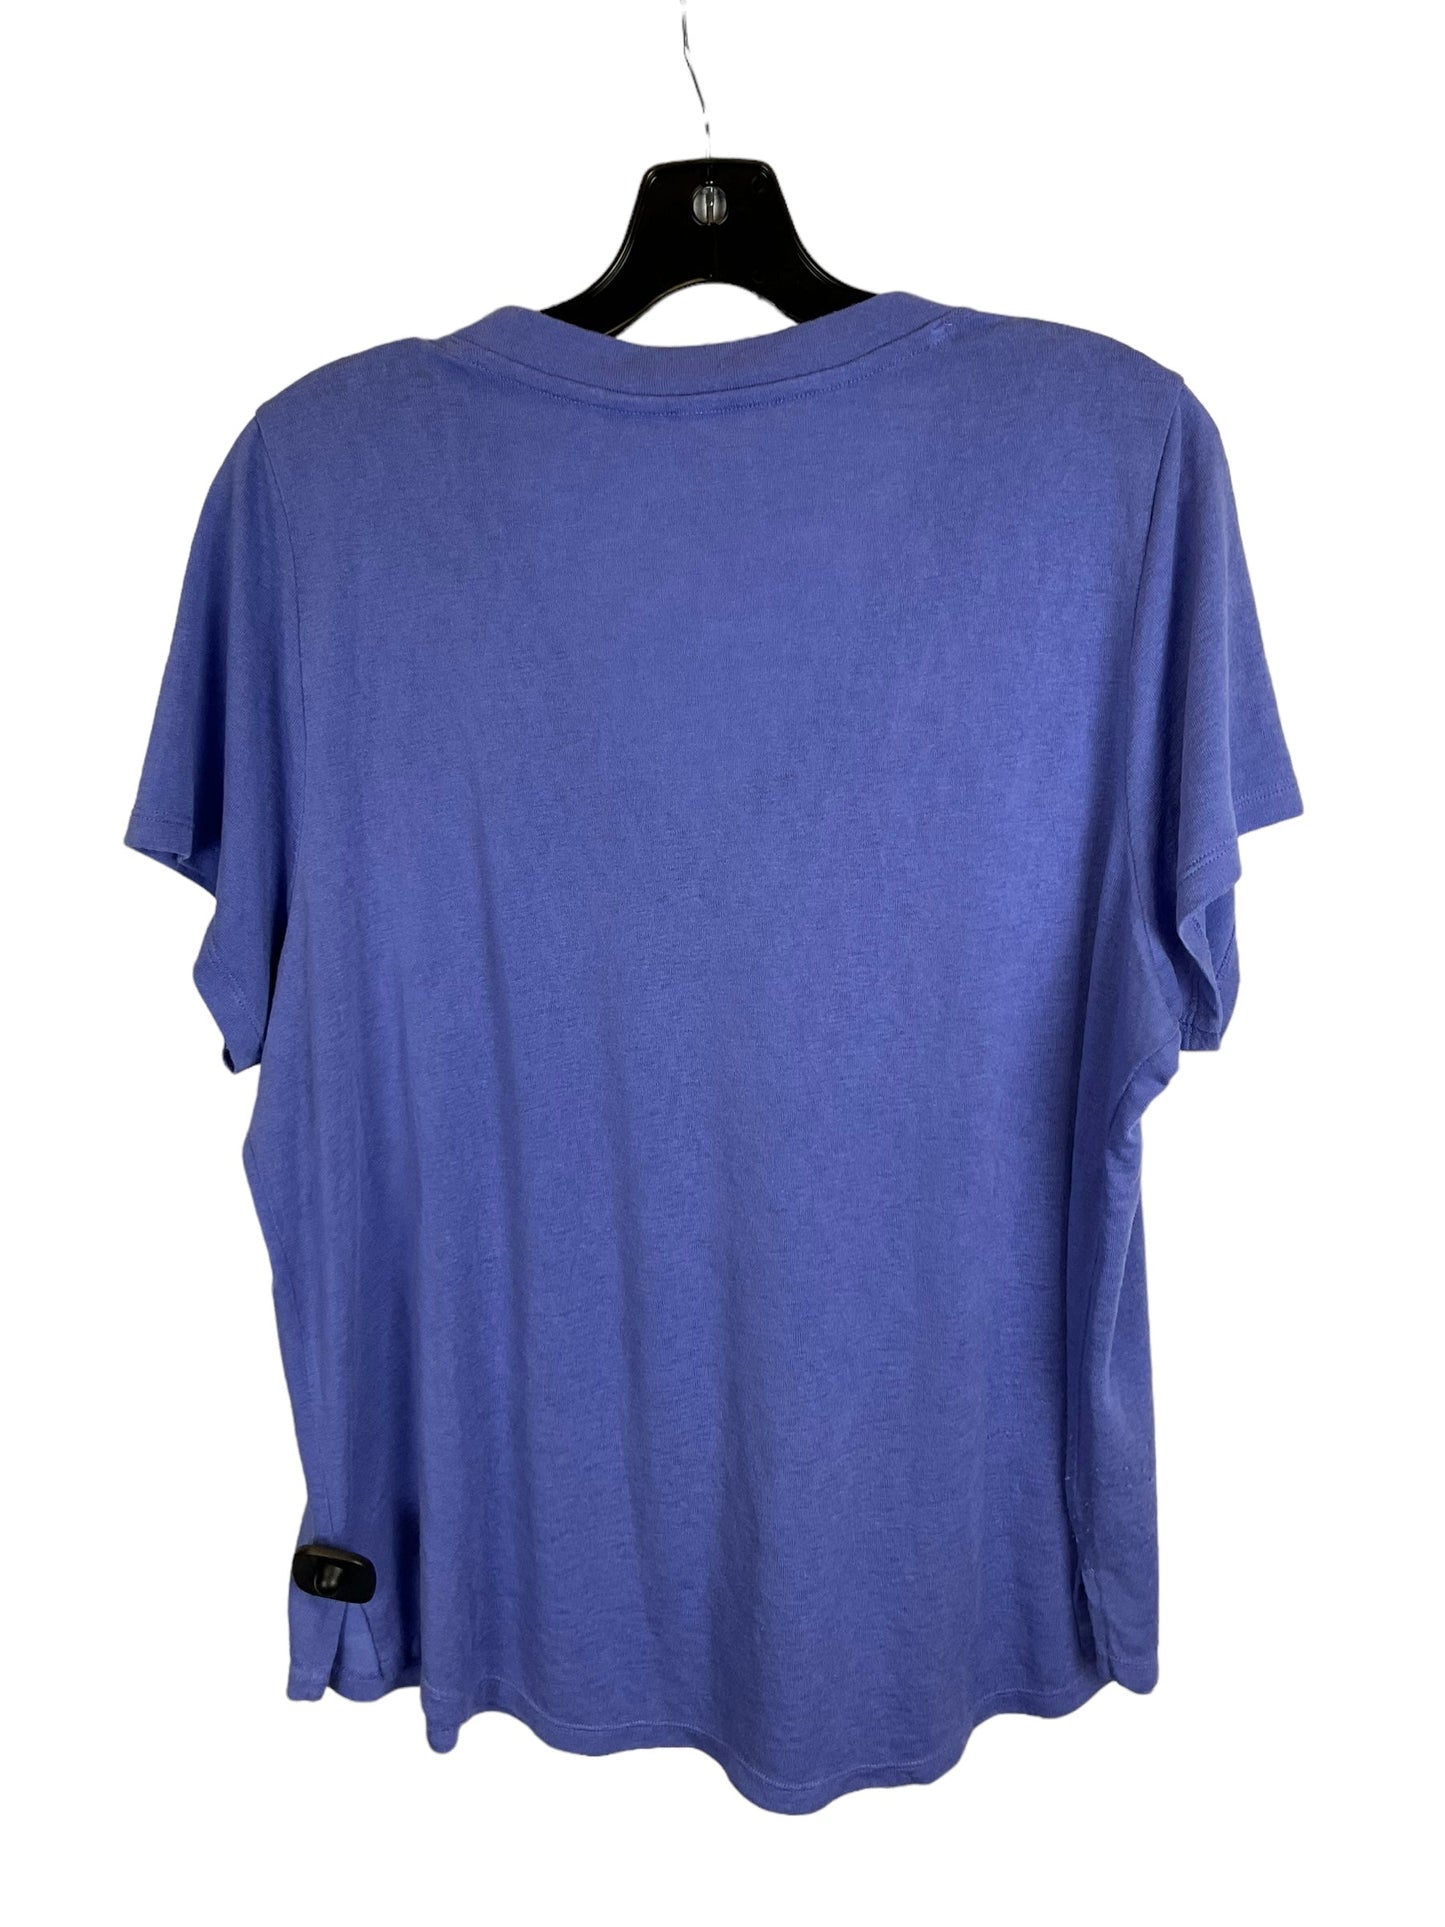 Purple Top Short Sleeve Basic Athleta, Size 1x